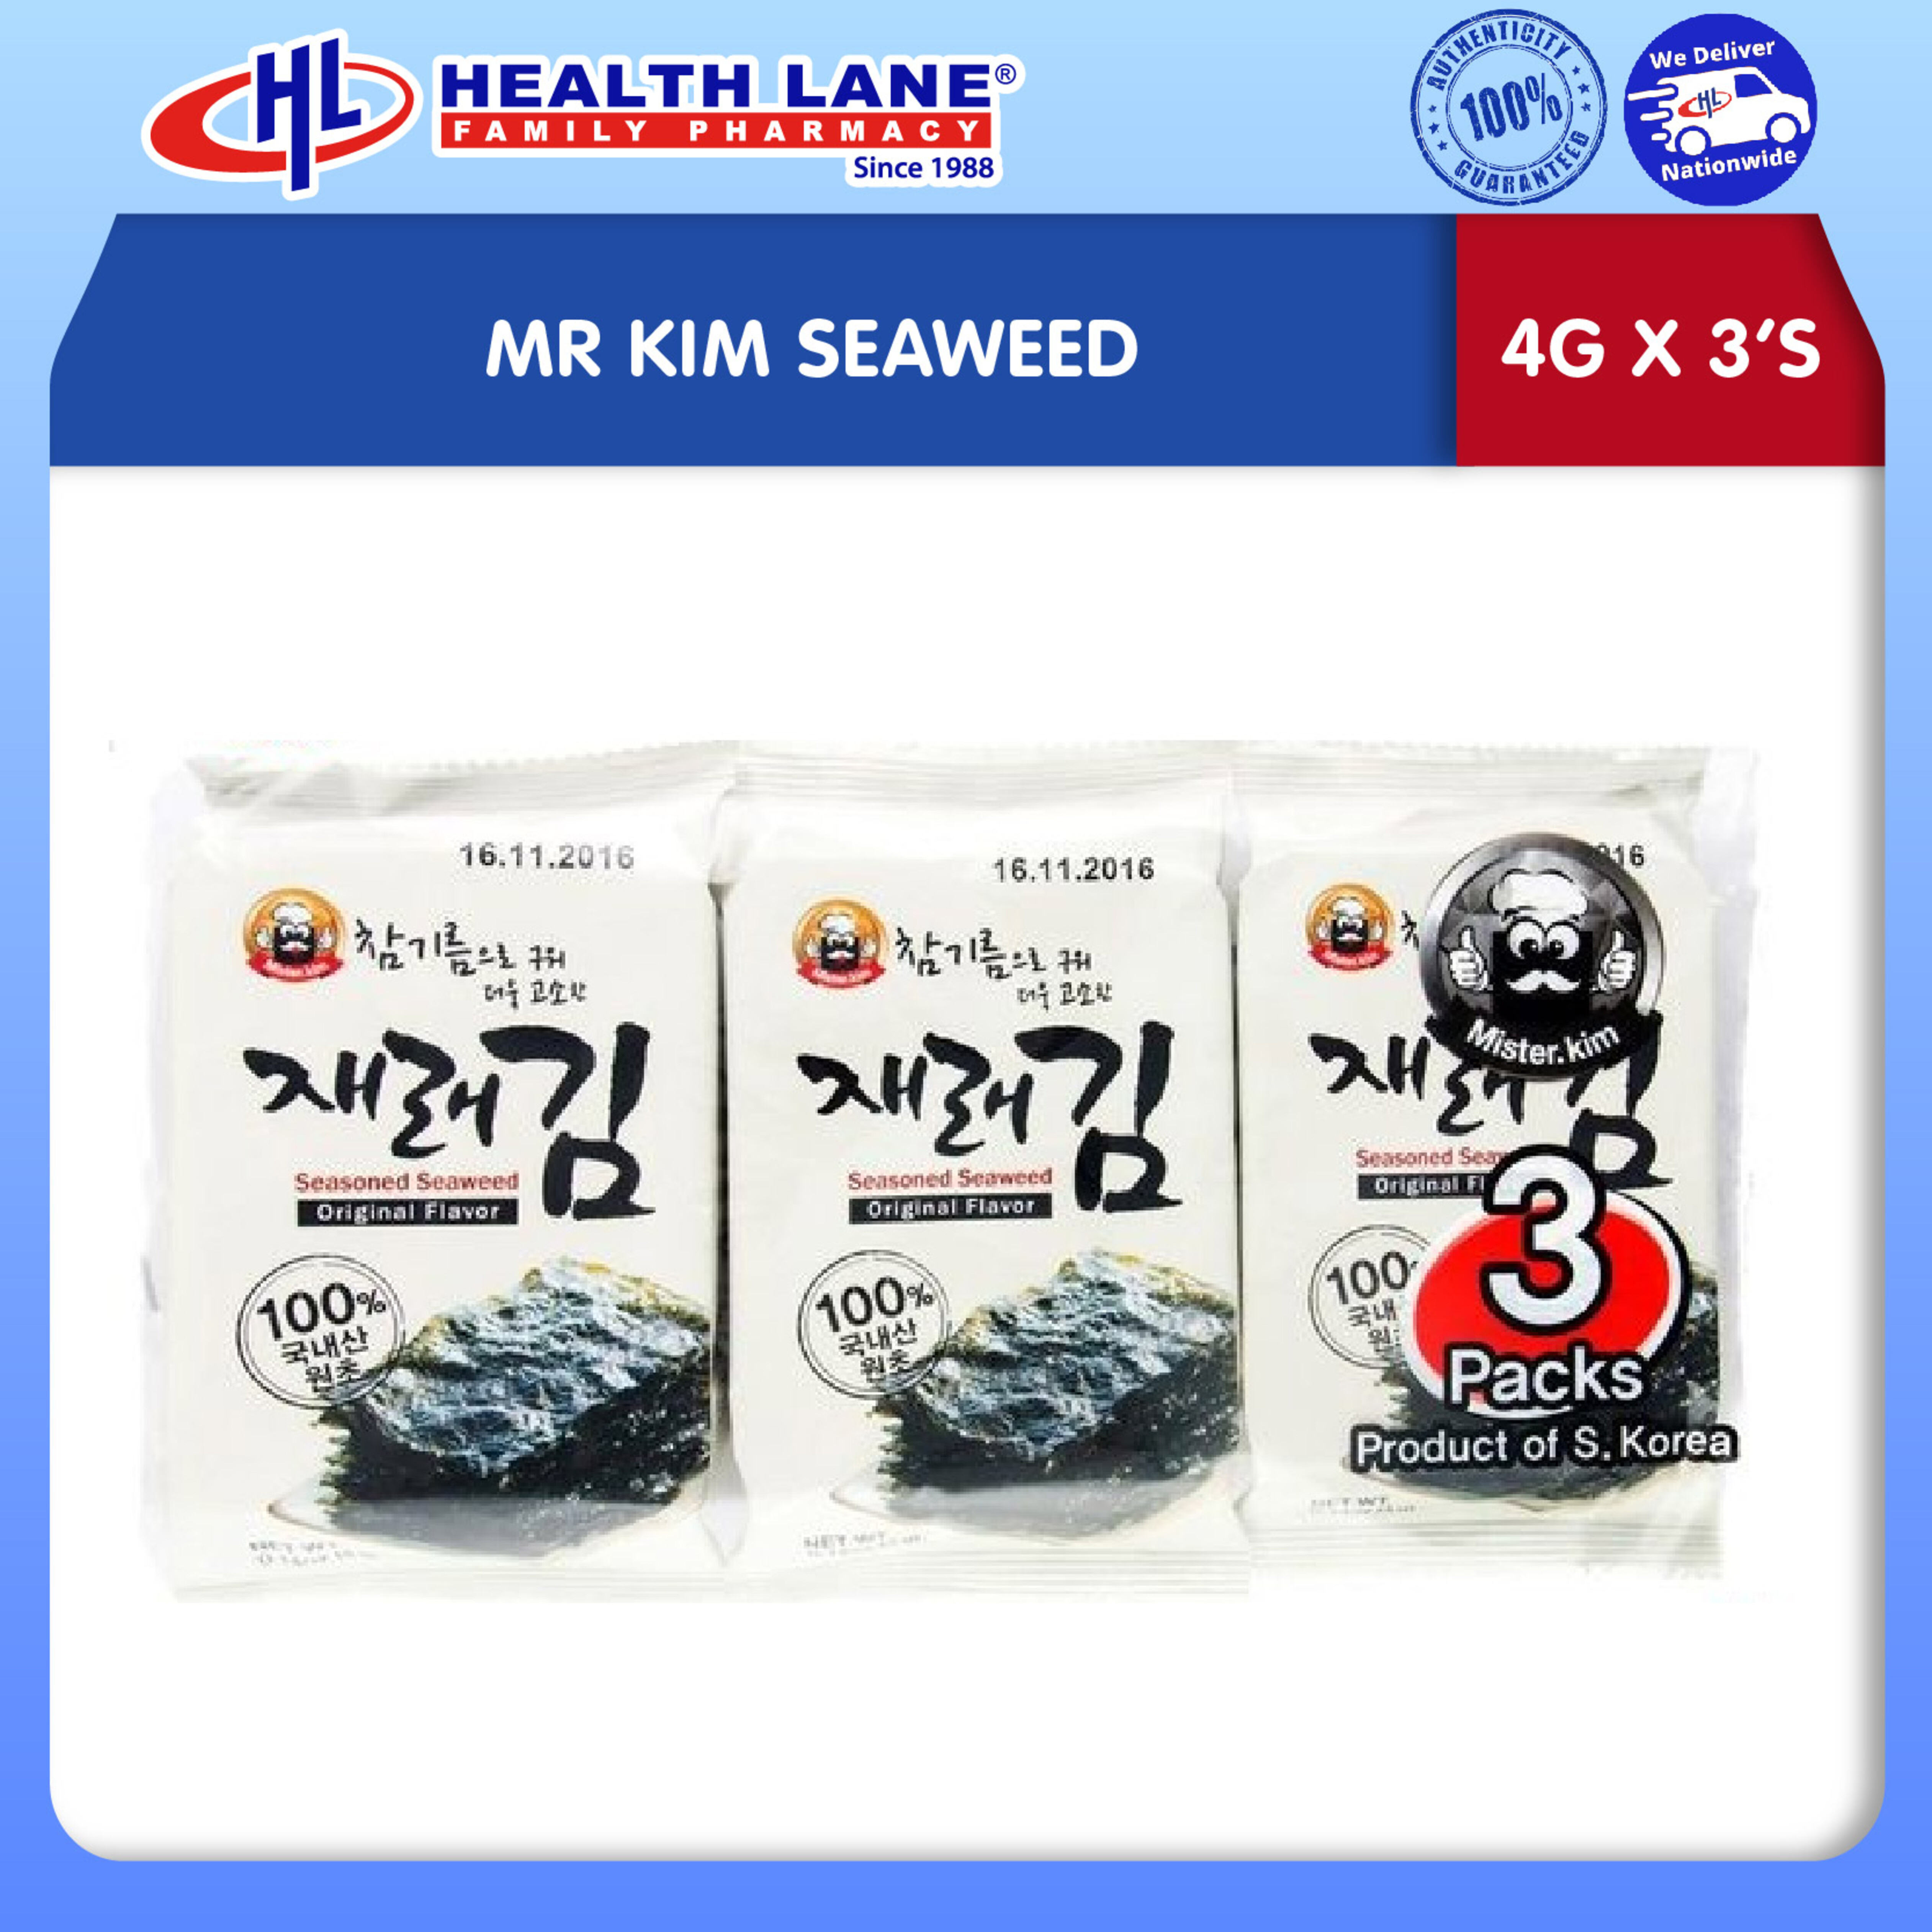 MR KIM SEAWEED (4G X 3'S)